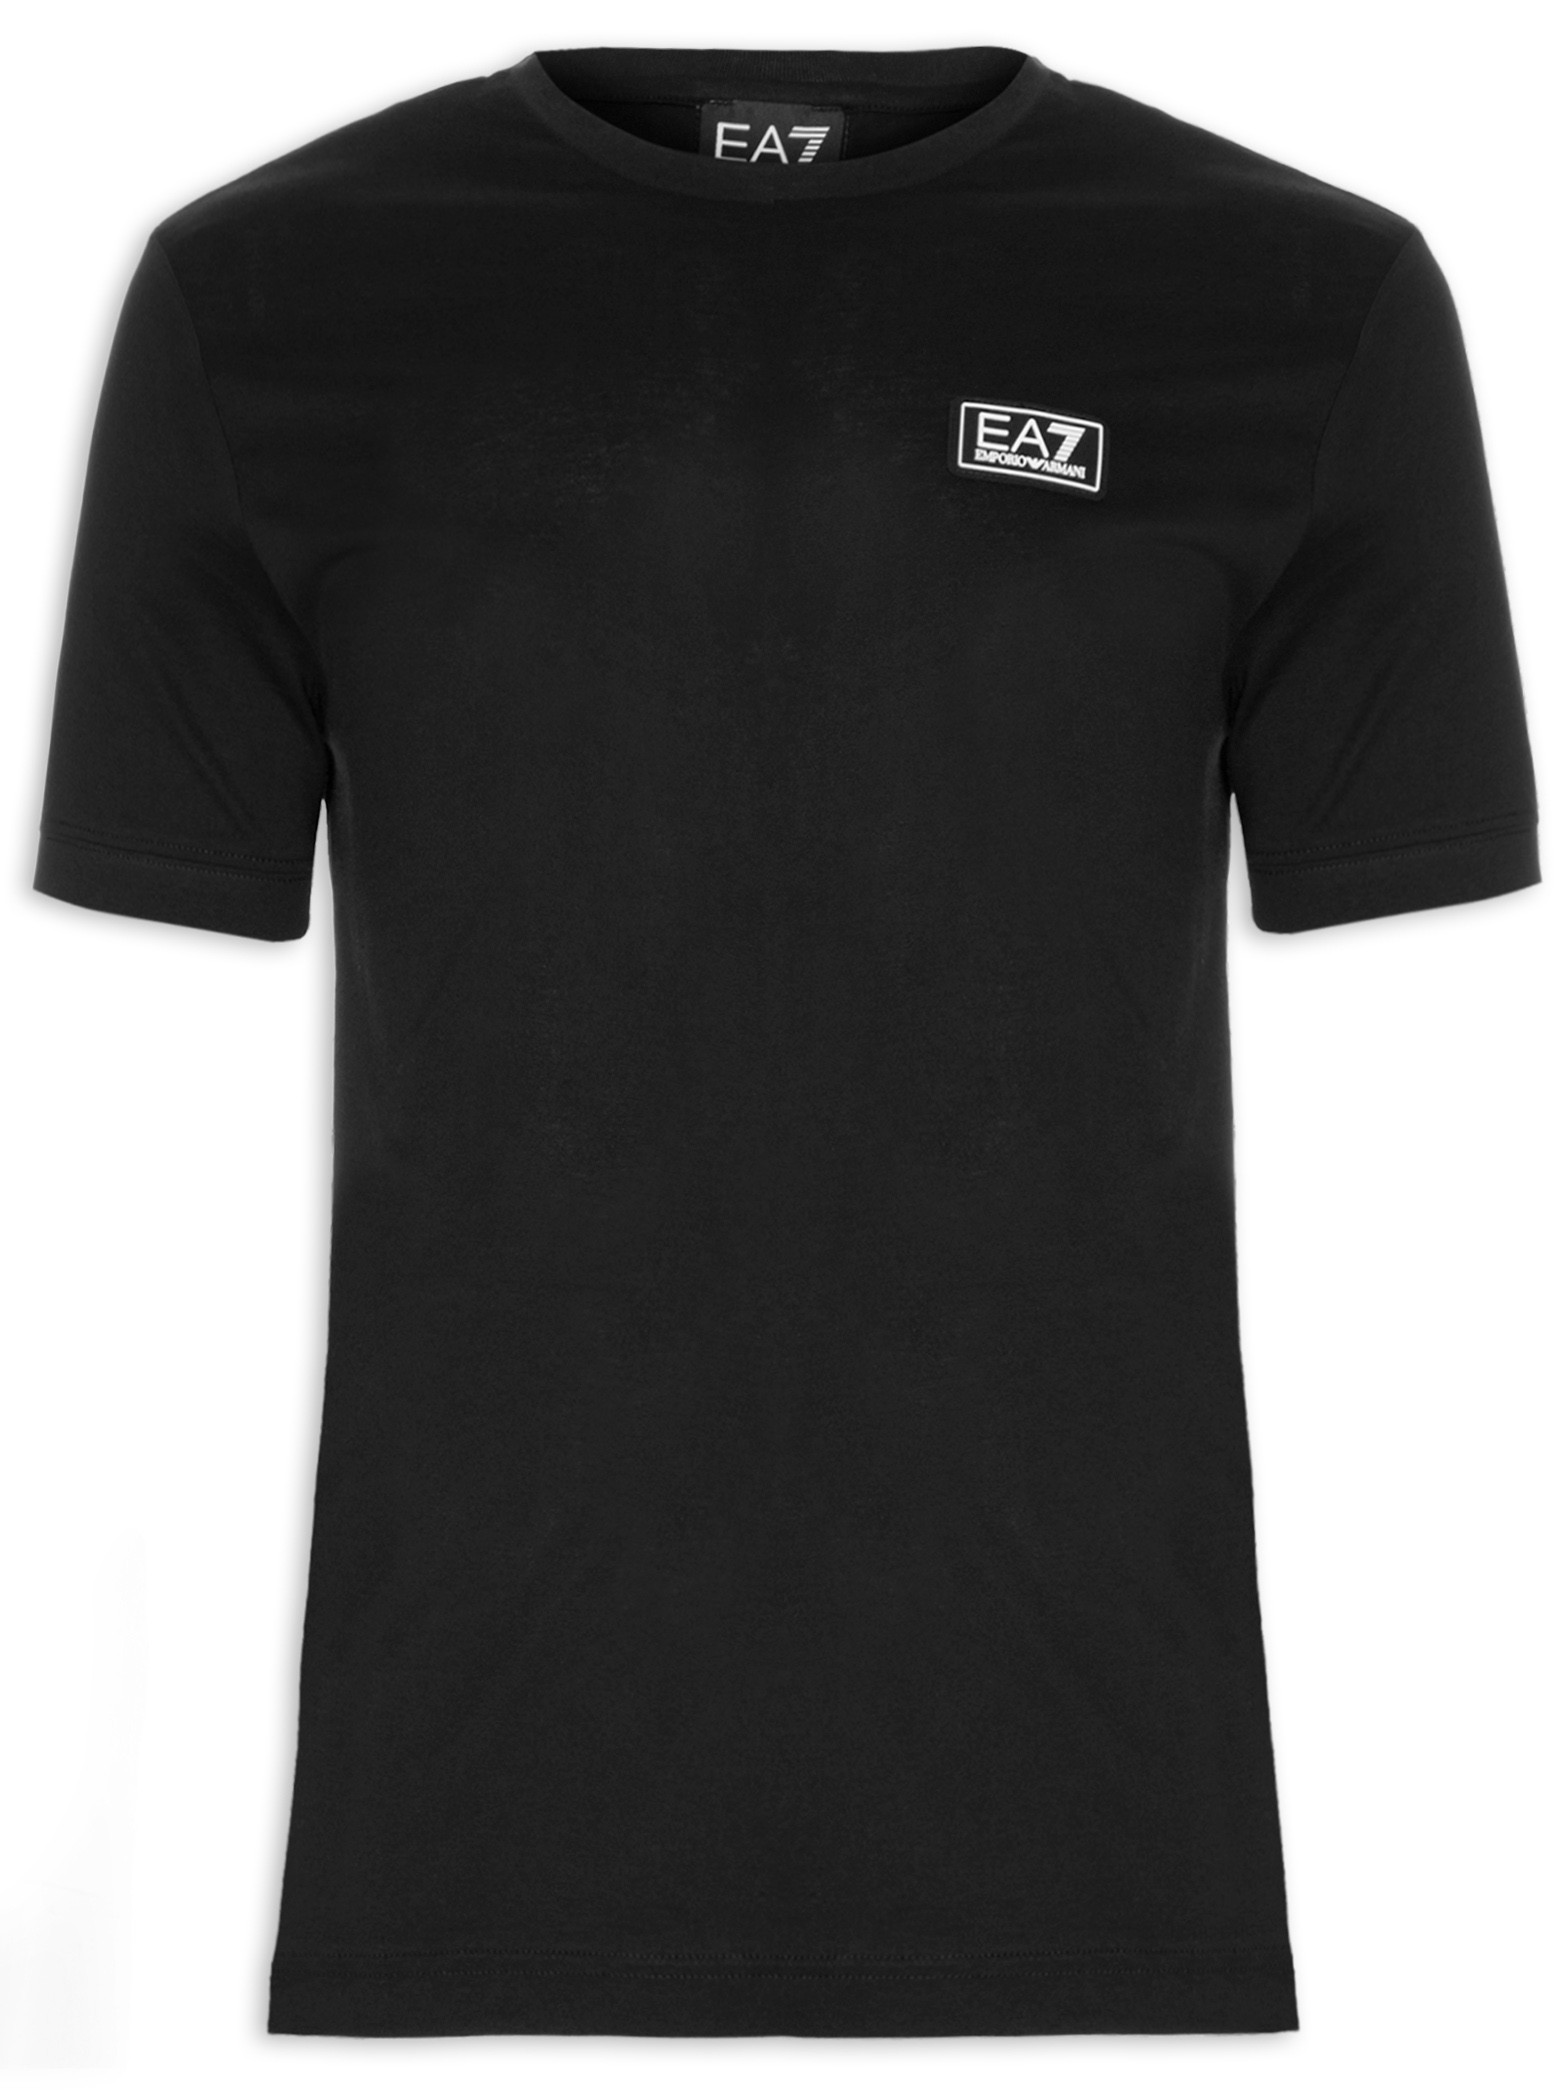 T-shirt Masculina Faixa - EA7 Emporio Armani - Preto - Shop2gether